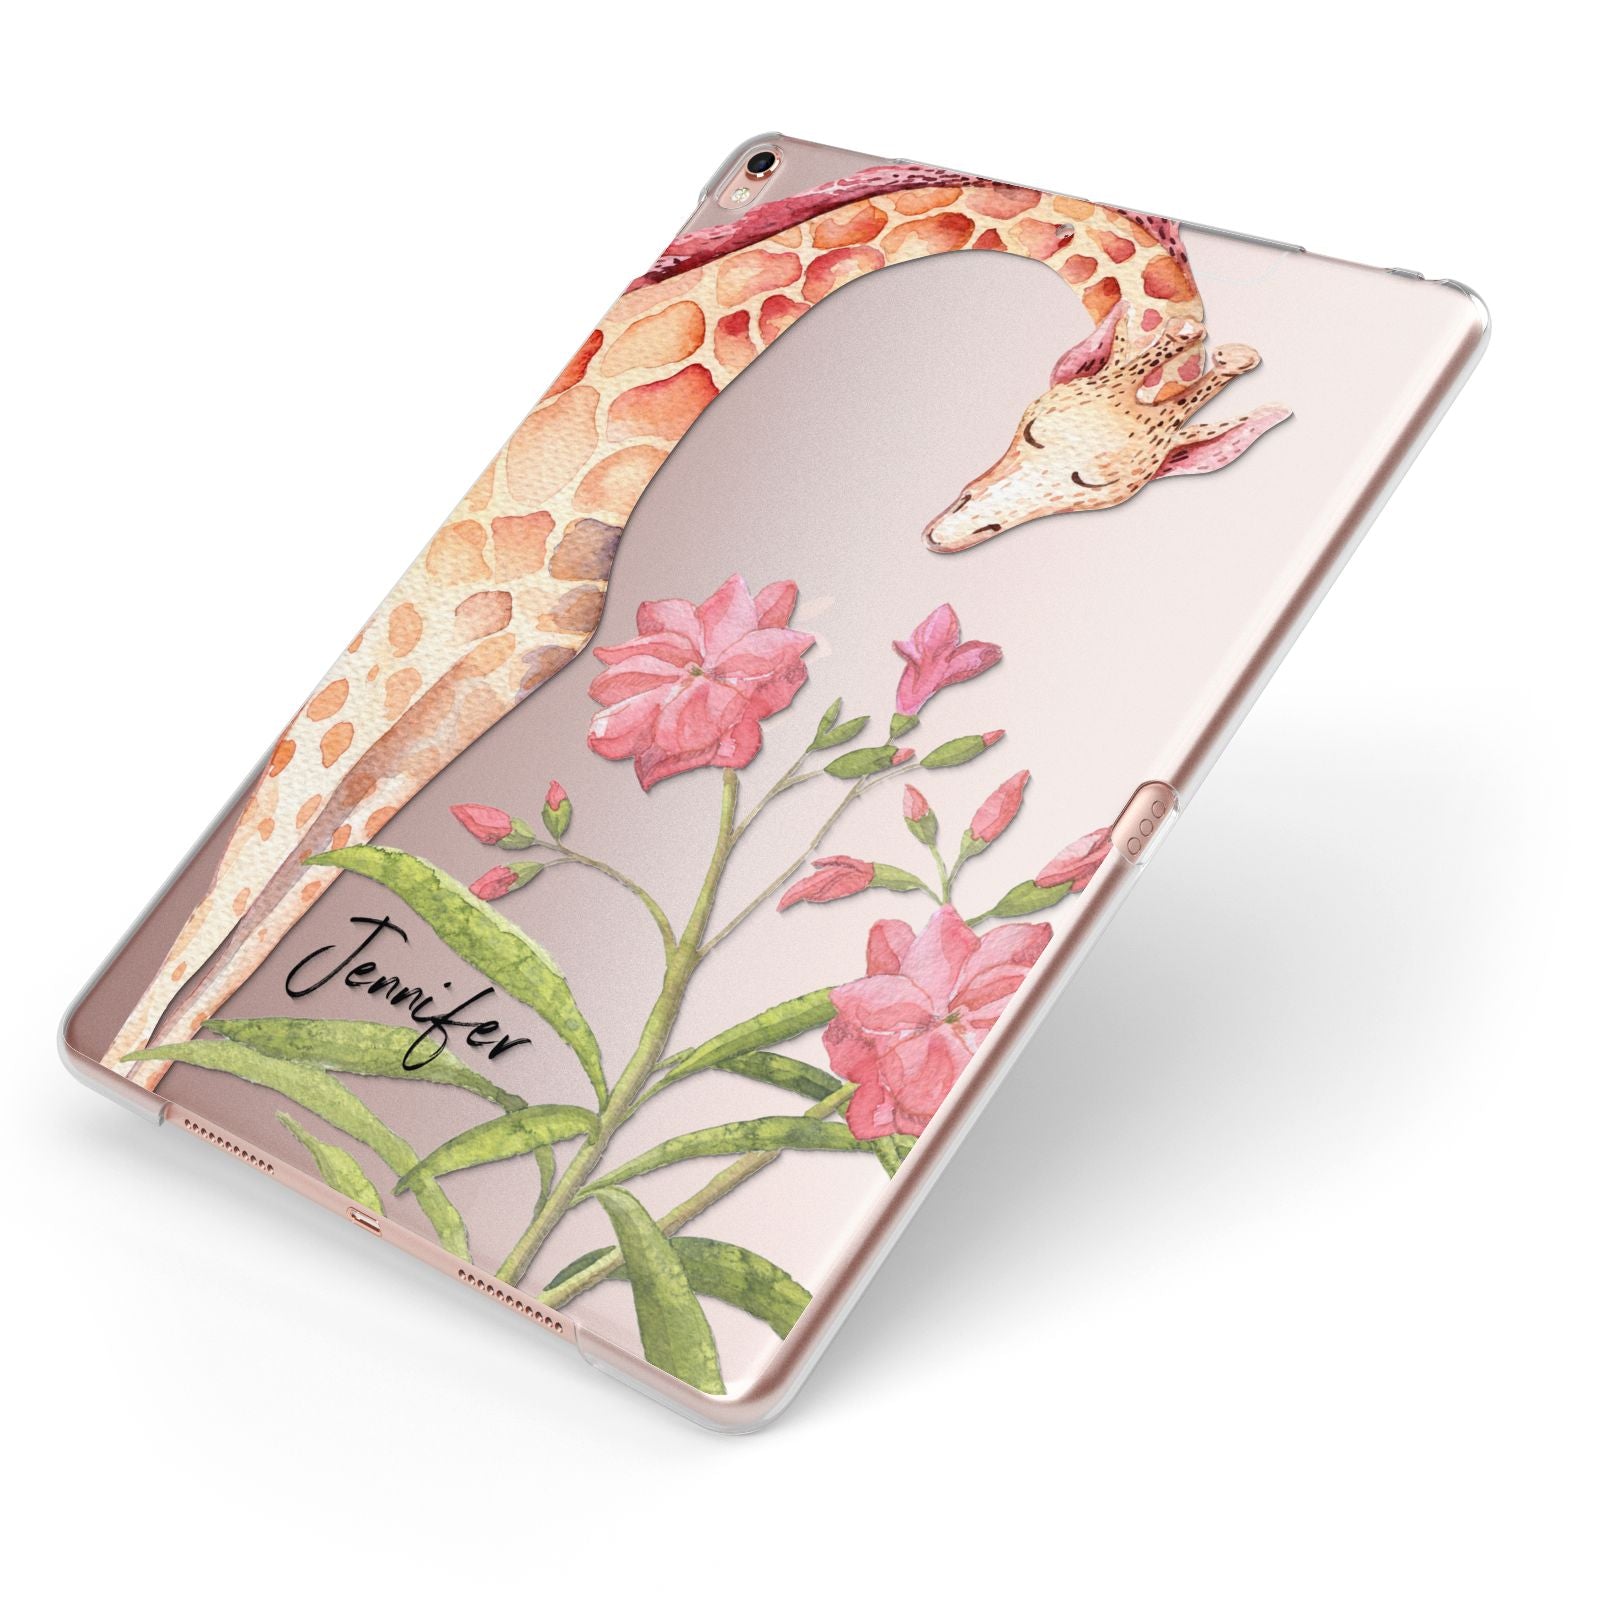 Personalised Giraffe Apple iPad Case on Rose Gold iPad Side View